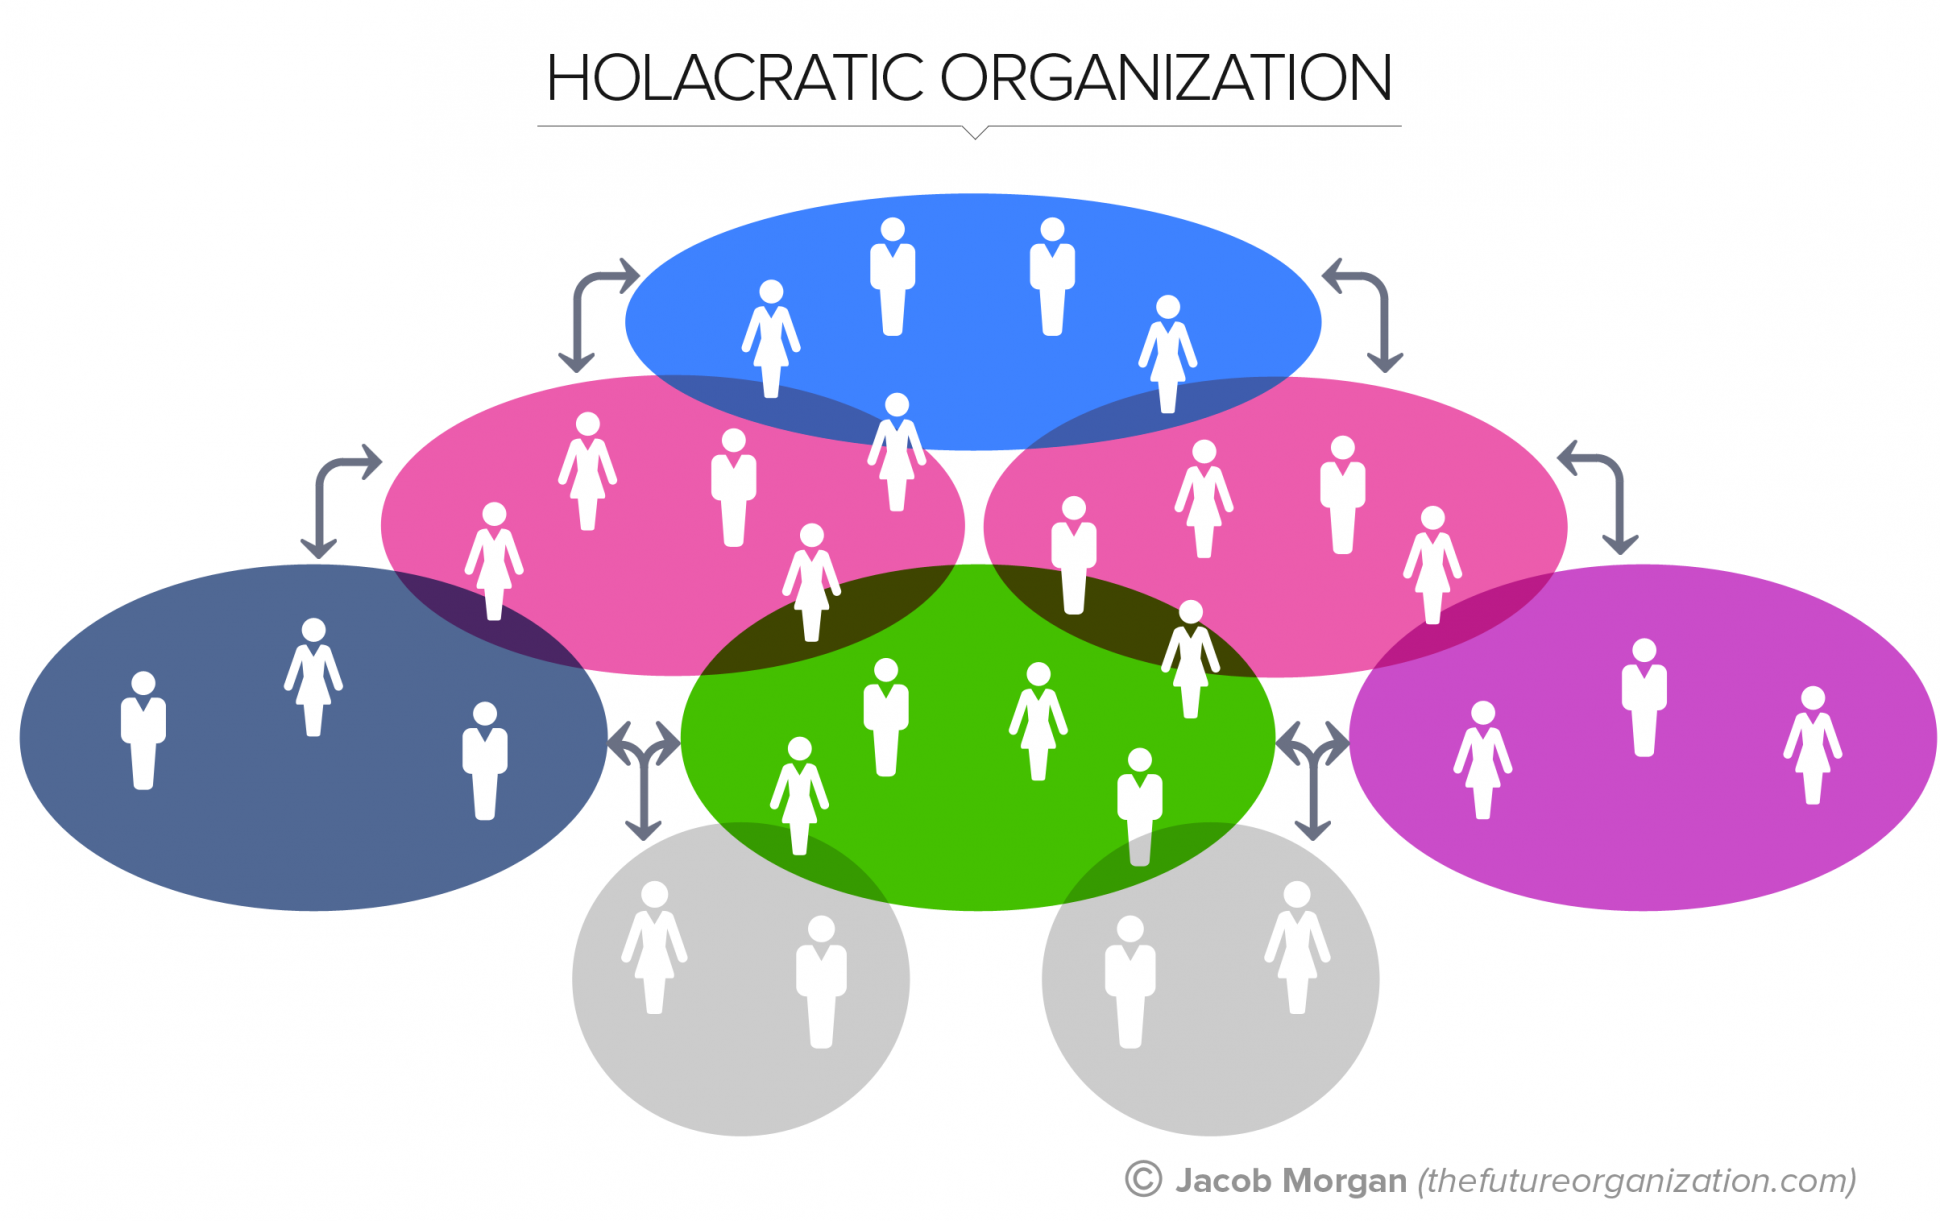 Holocratic Organization